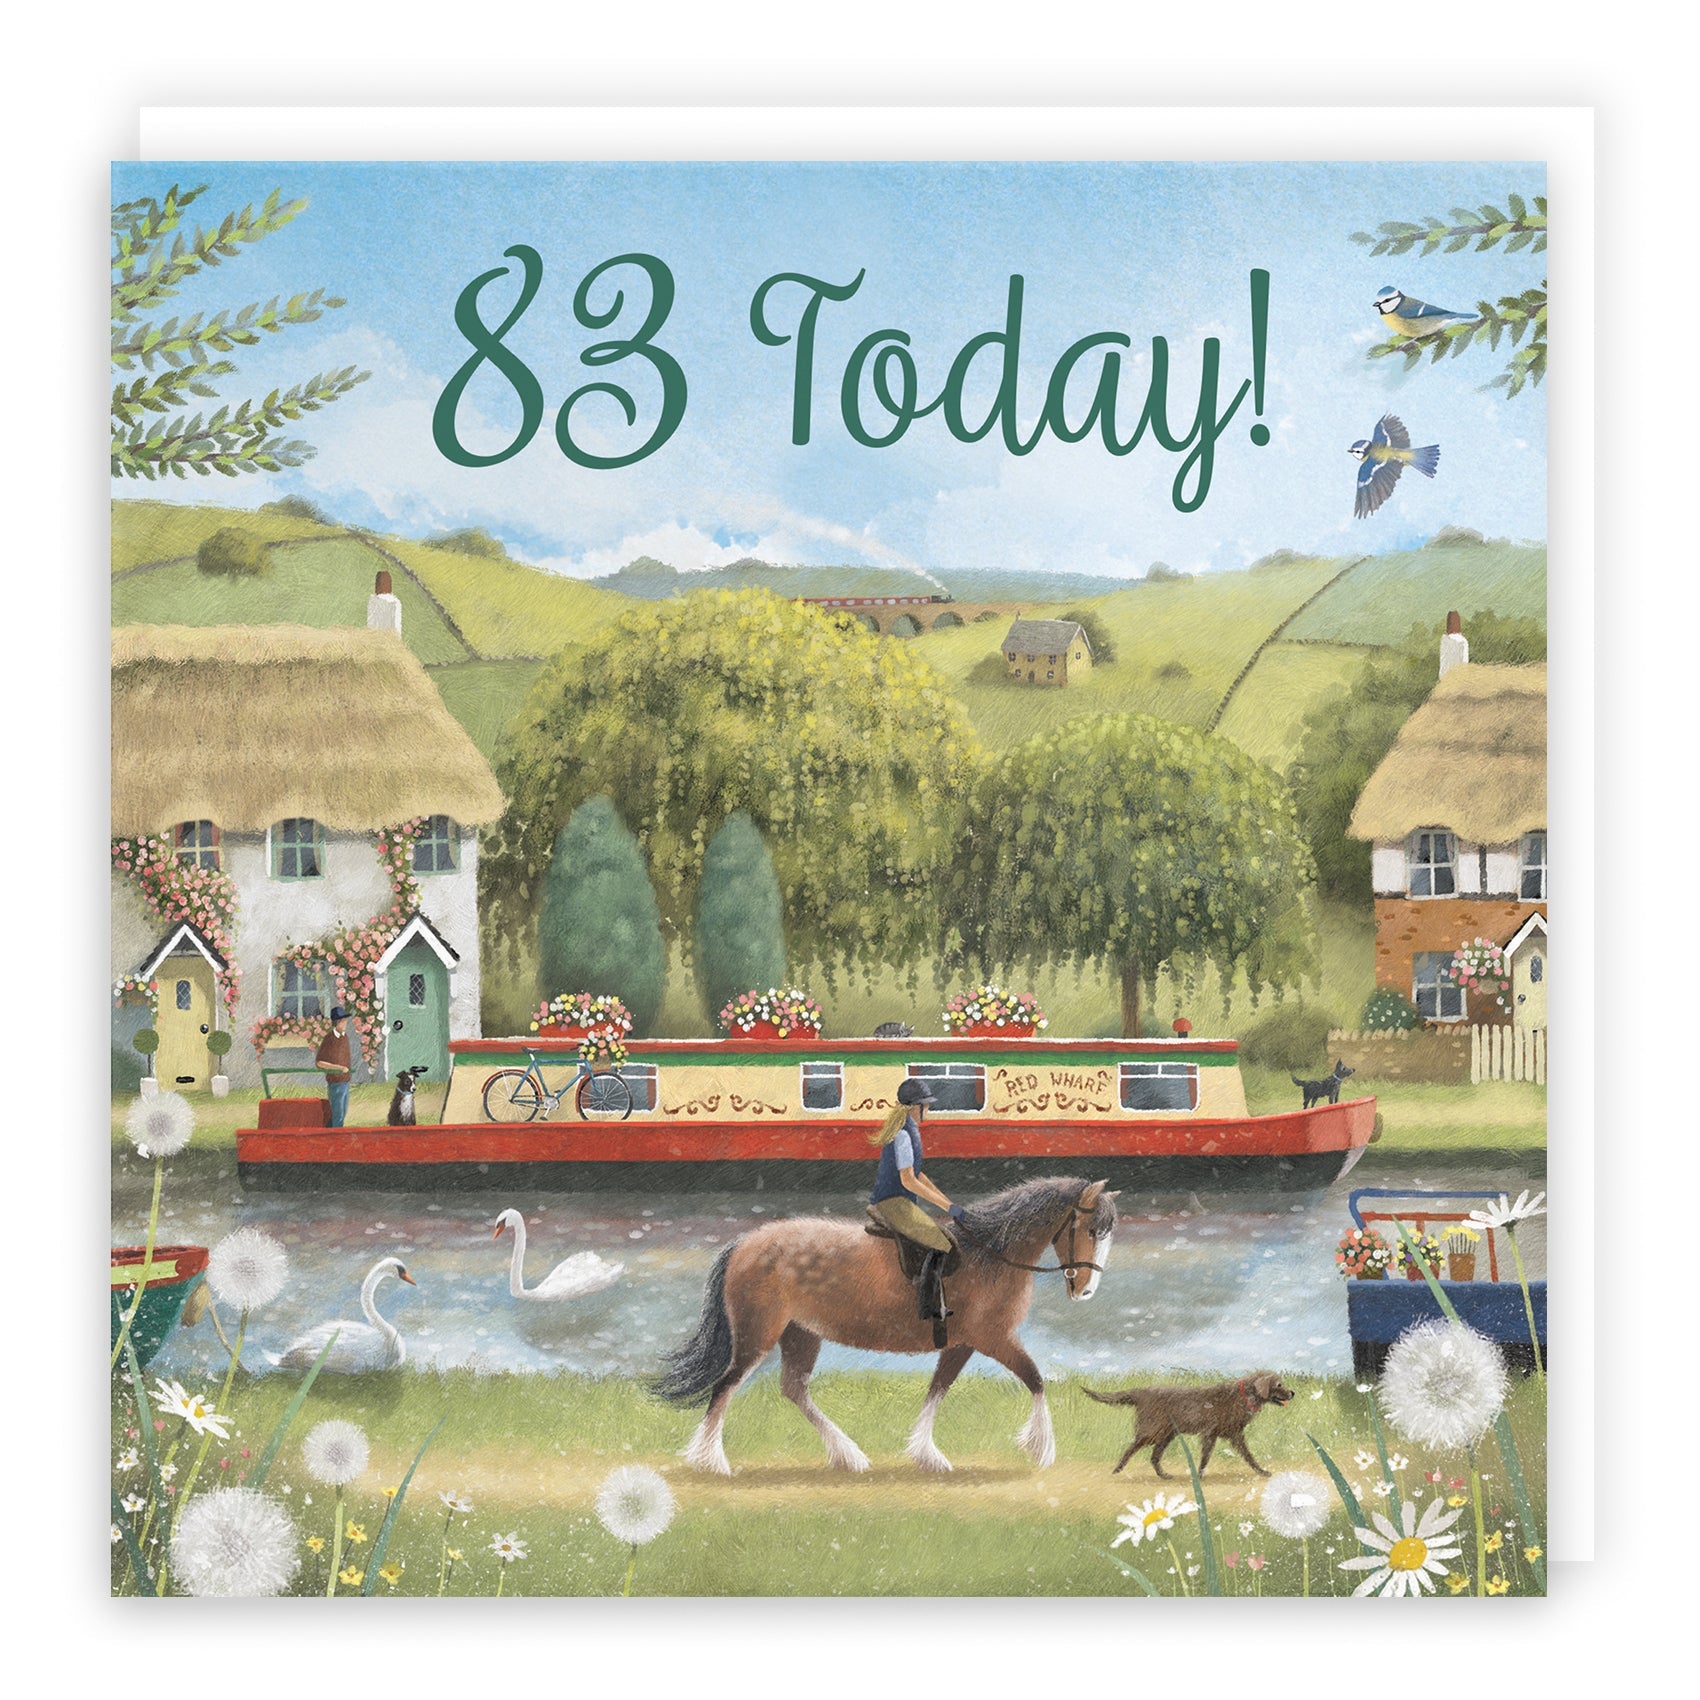 83rd Birthday Cards - Age 83